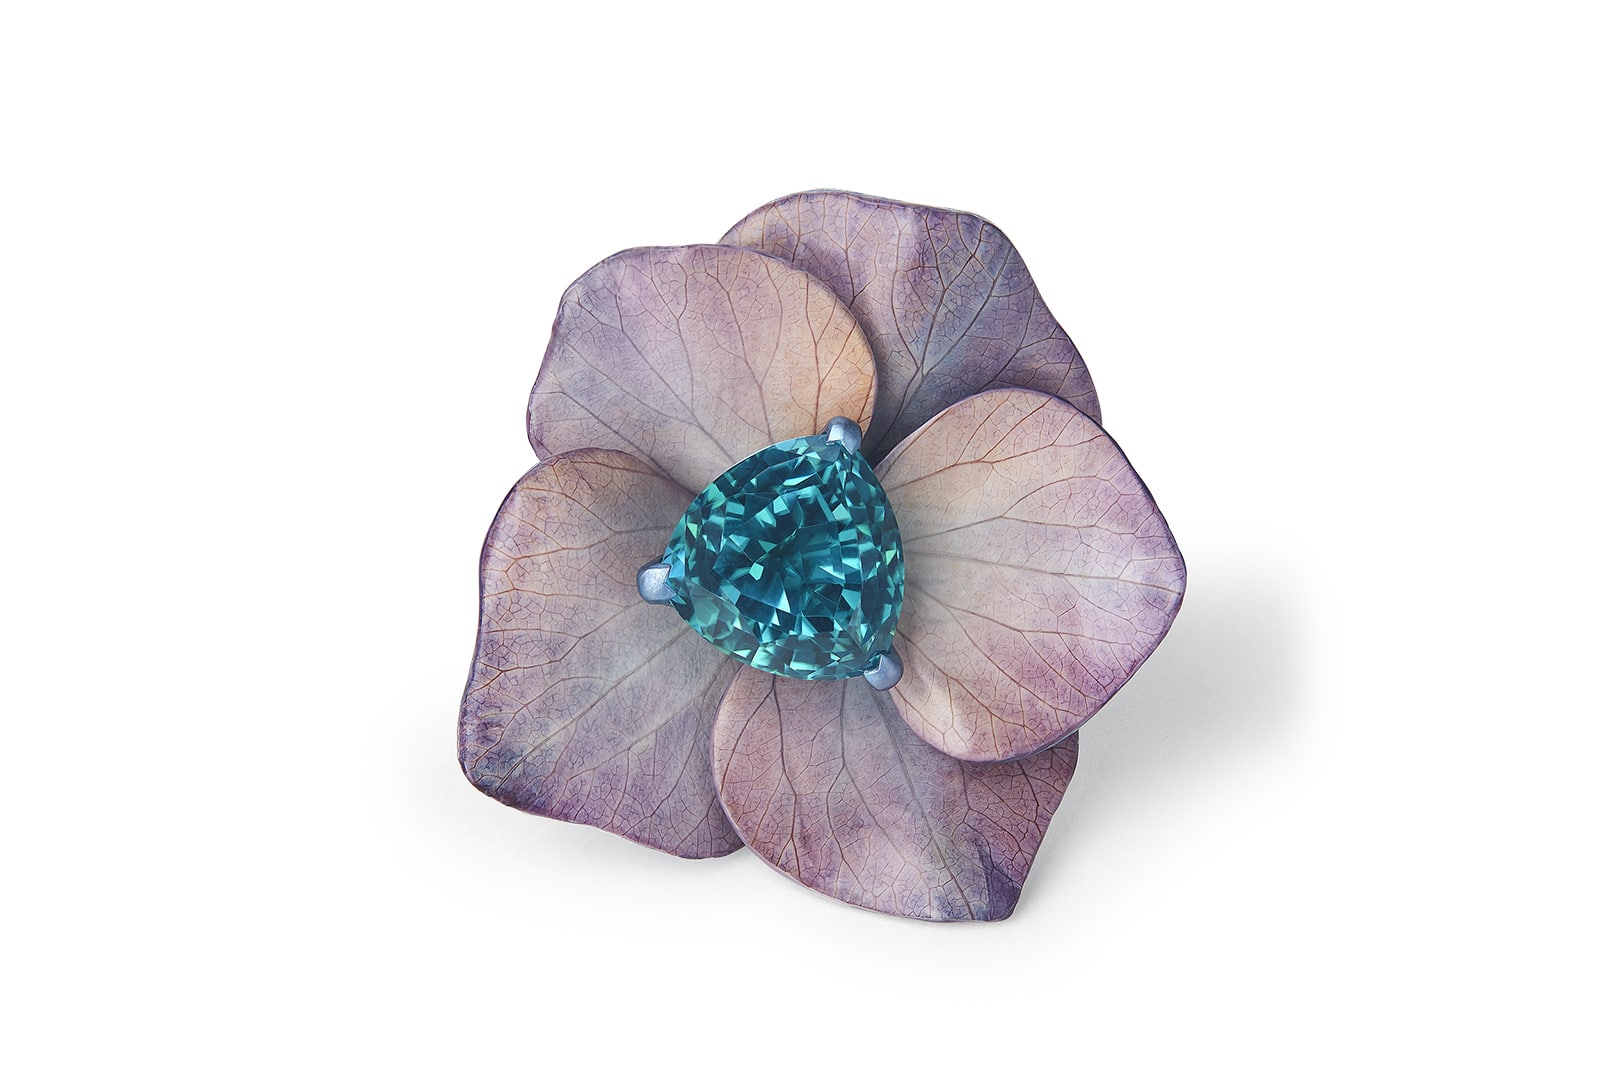 Hortensia Violet Bleu - saphir indigolite troïda - 8,7 carats - Boucheron